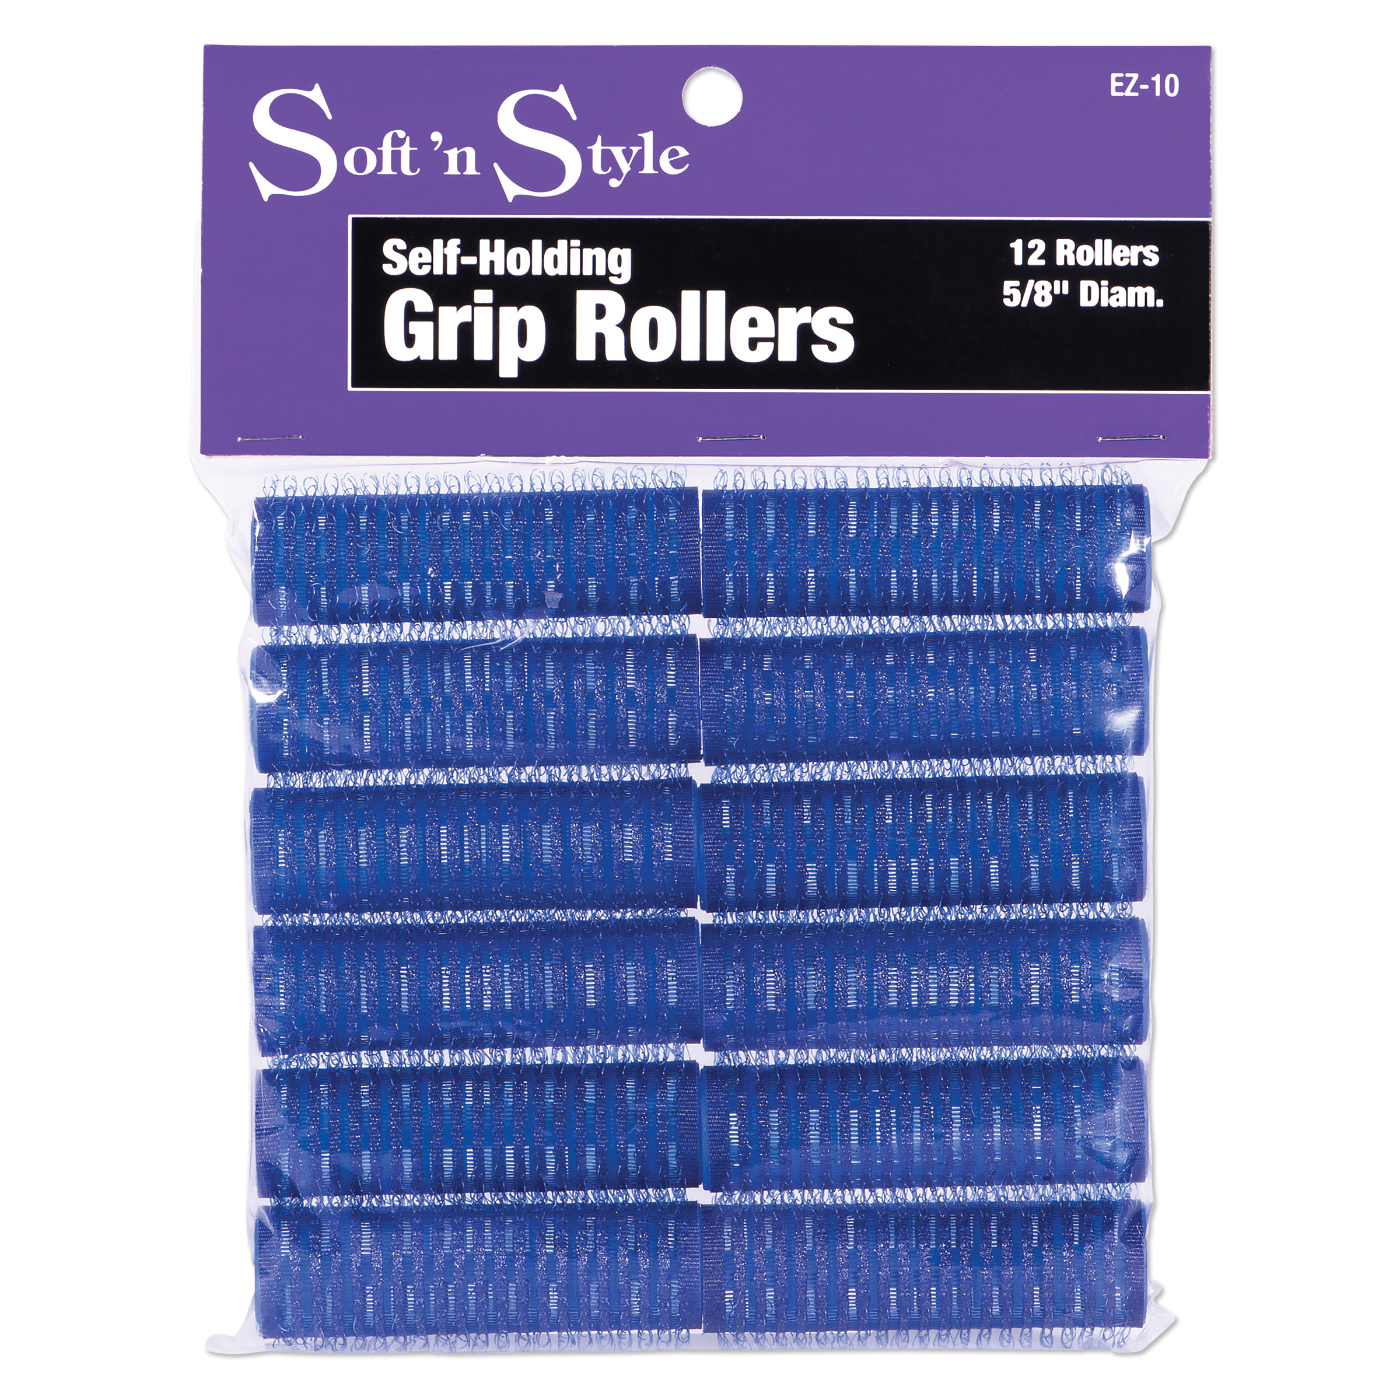 SOFT 'N STYLE Salon Beauty Hair E-Z Grip 12 Rollers 5/8